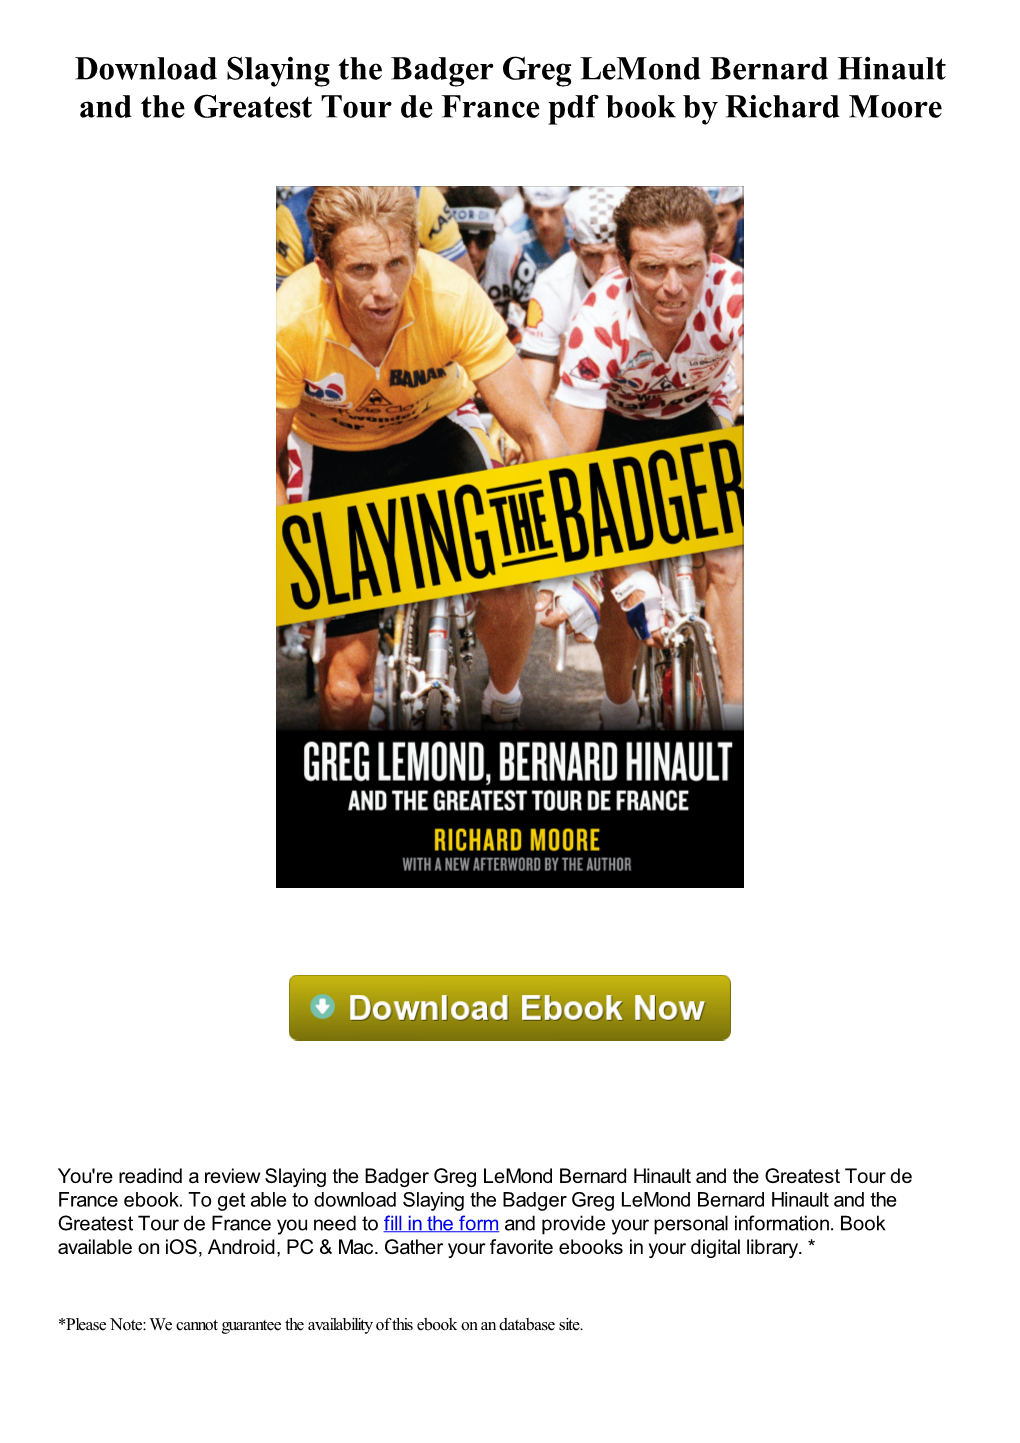 Download Slaying the Badger Greg Lemond Bernard Hinault and the Greatest Tour De France Pdf Book by Richard Moore